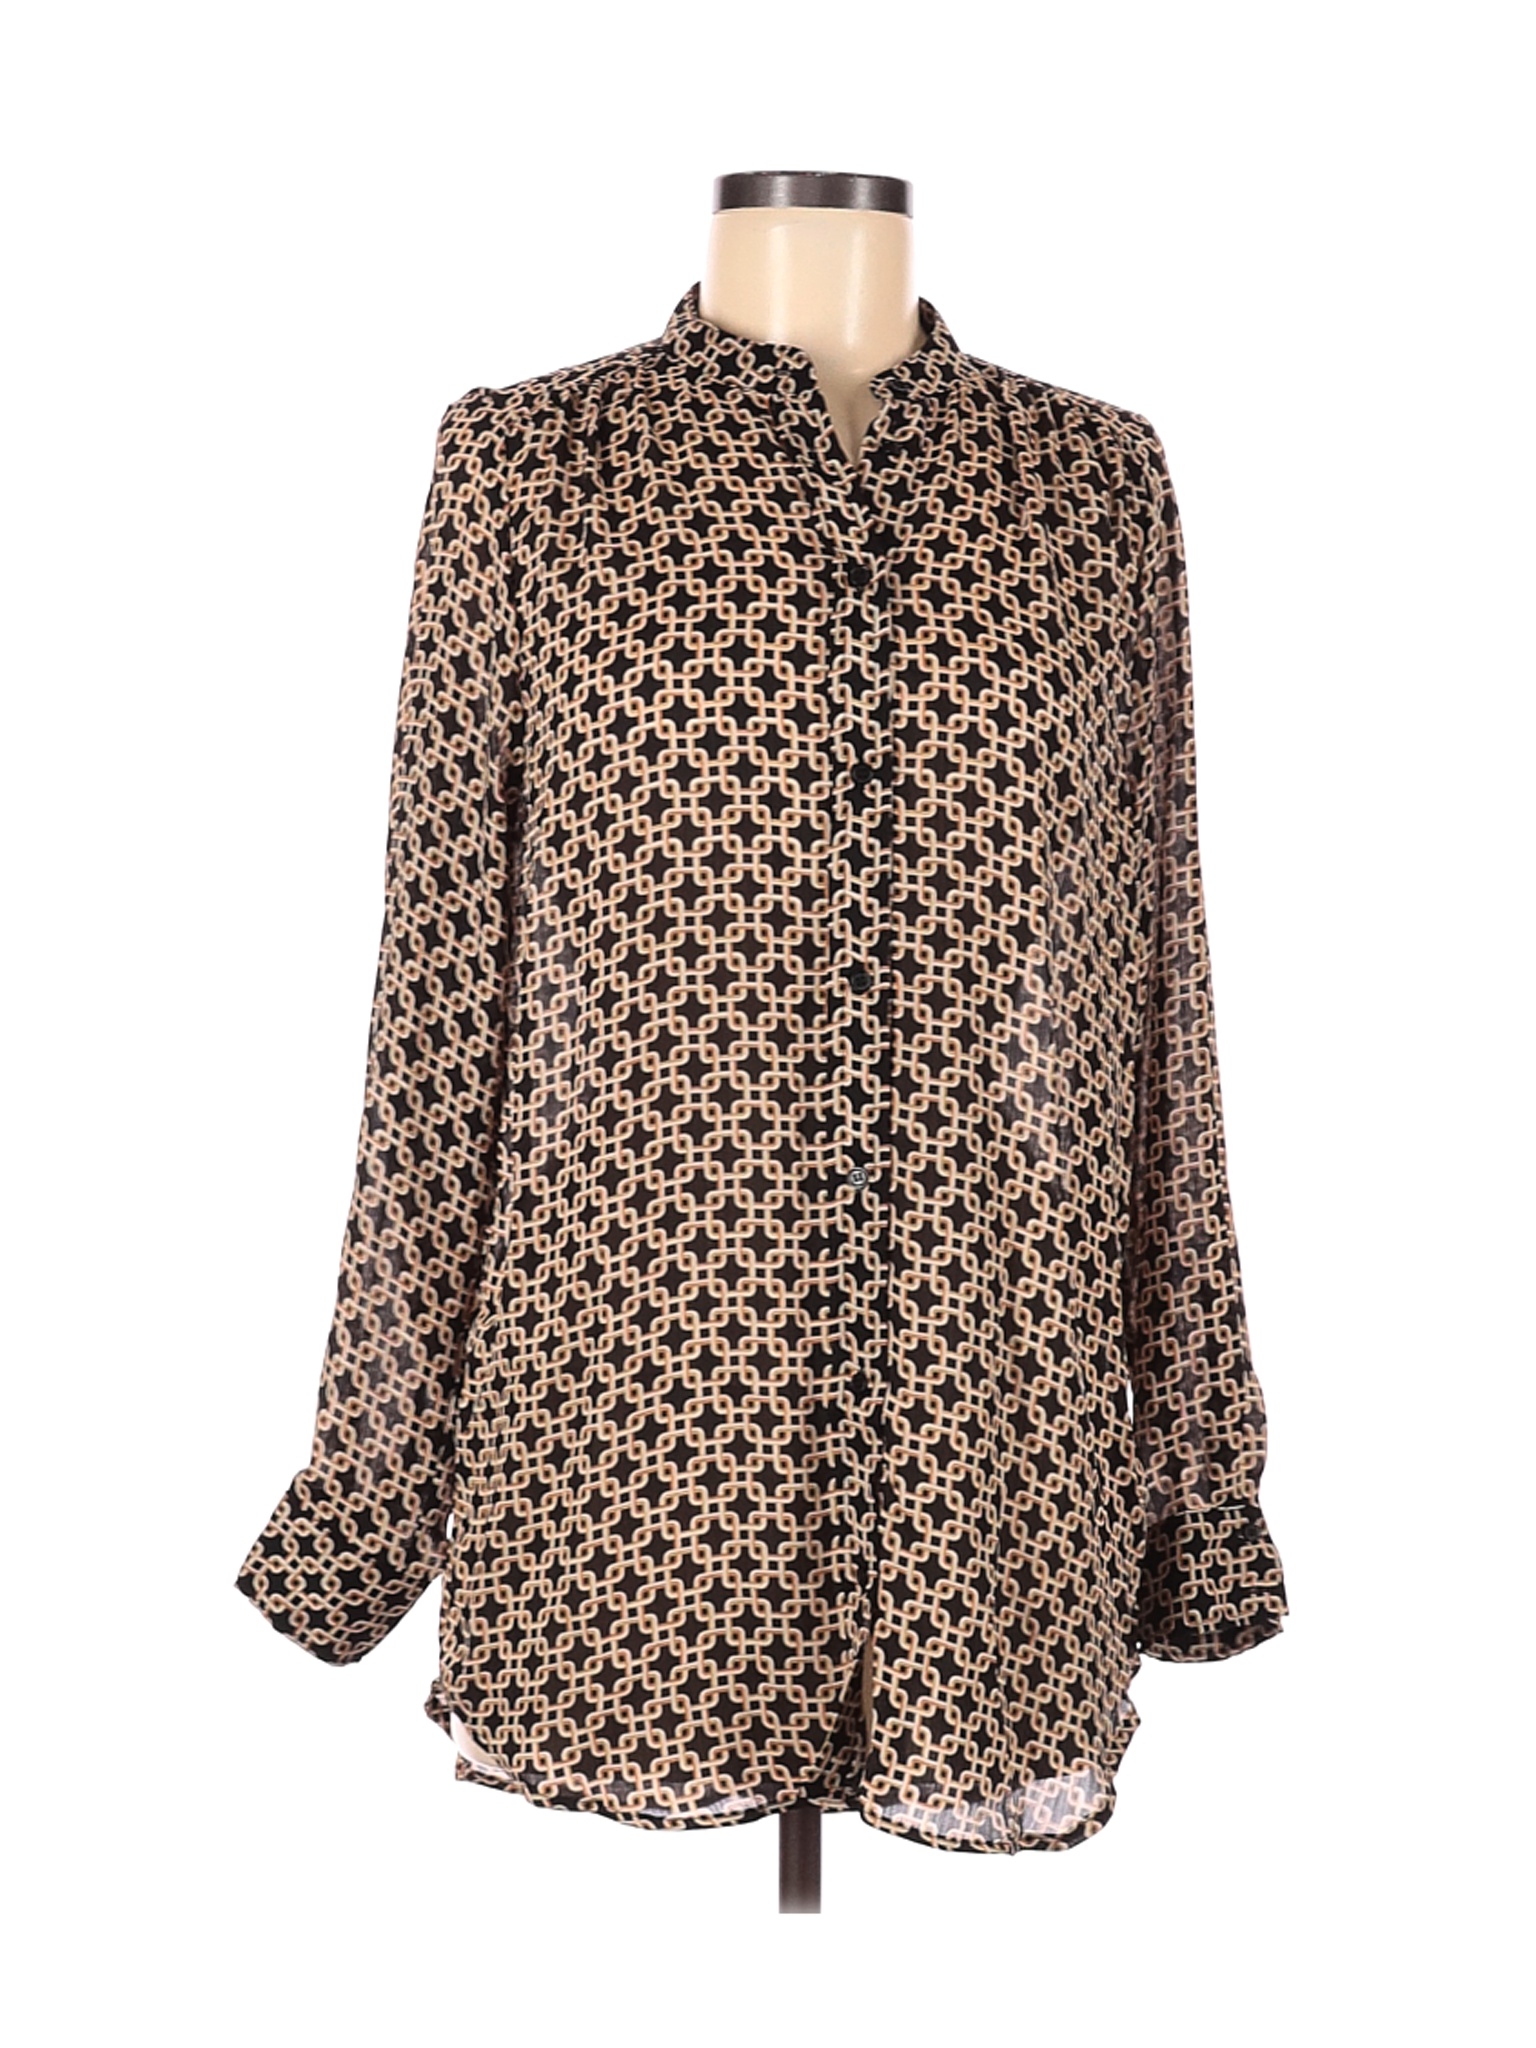 H&M Women Black Long Sleeve Blouse 4 | eBay